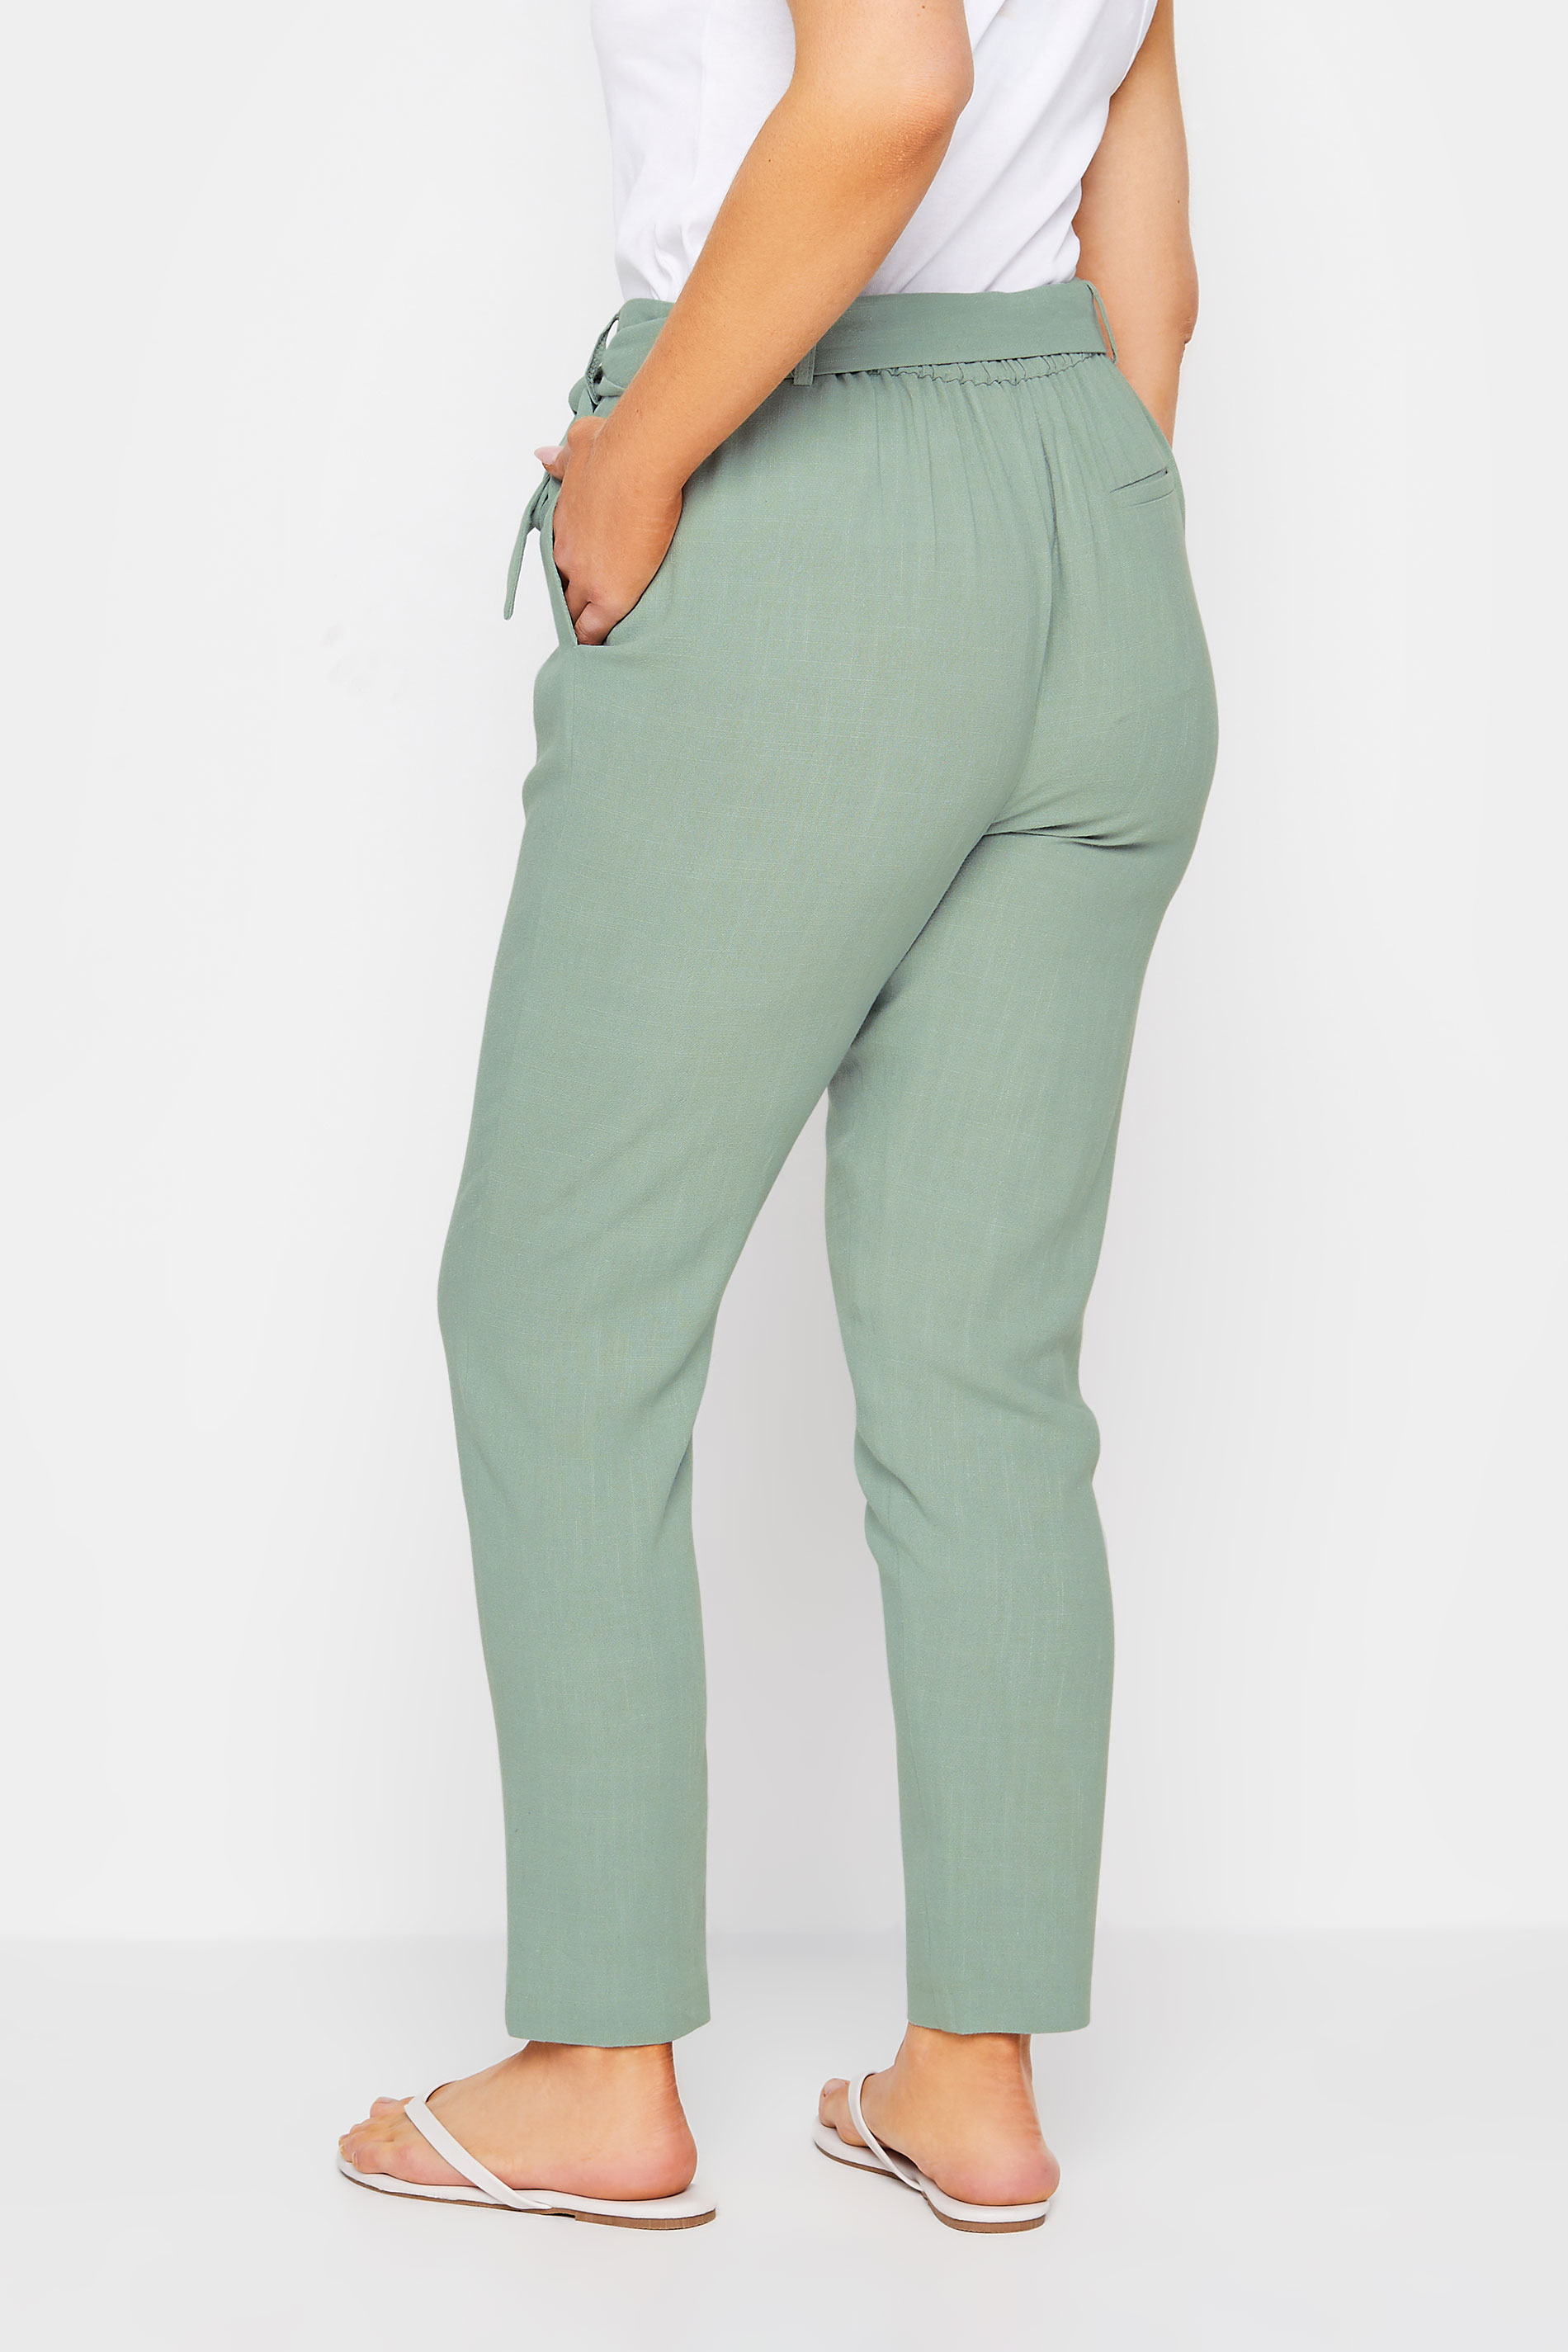 M&Co Green Tie Waist Linen Trousers | M&Co 2